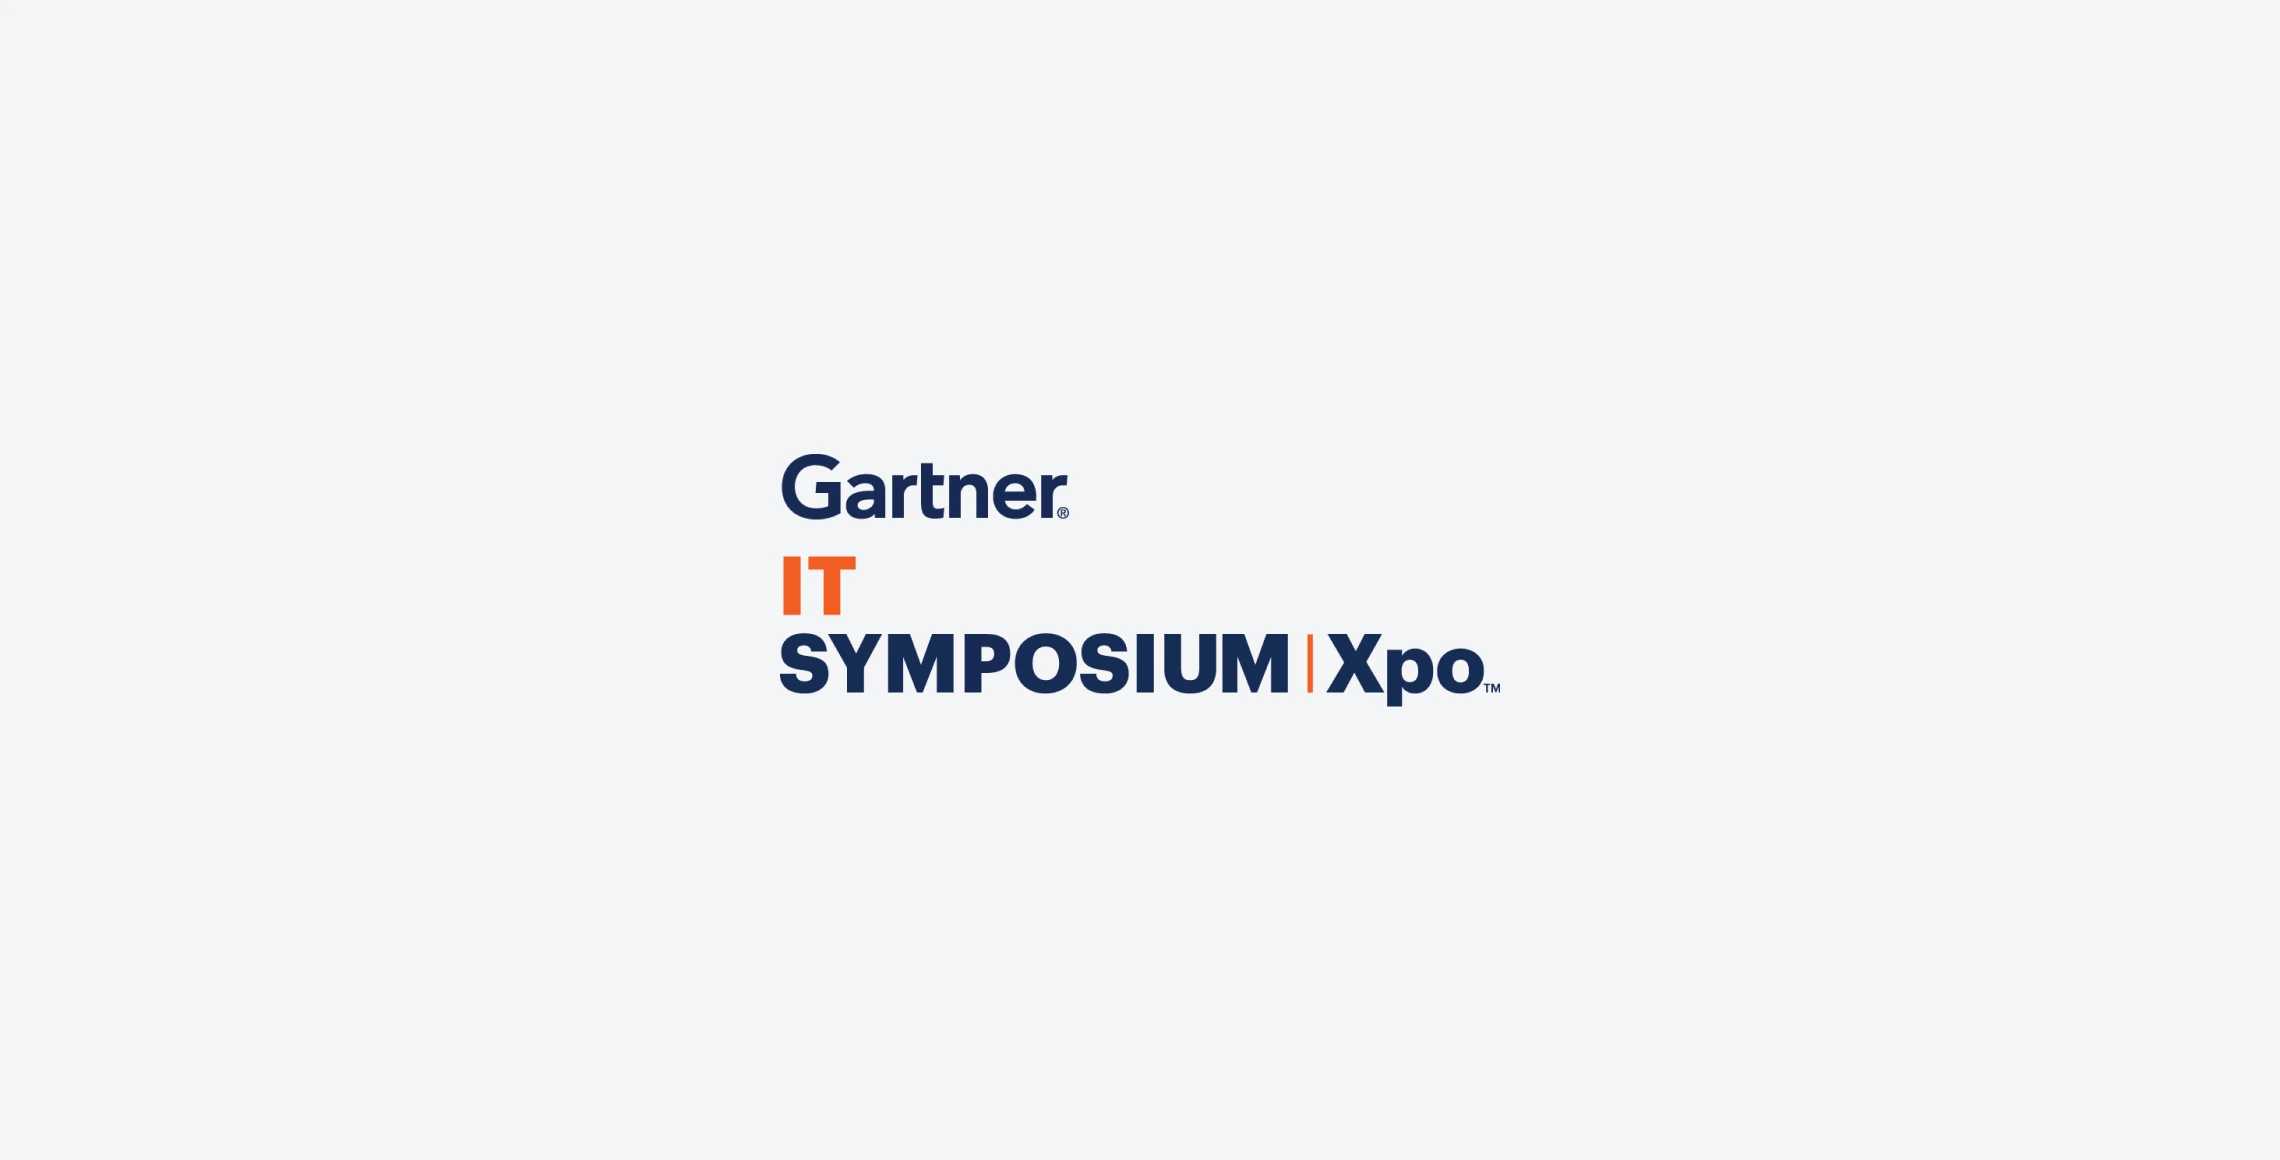 Gartner Symposium Xpo